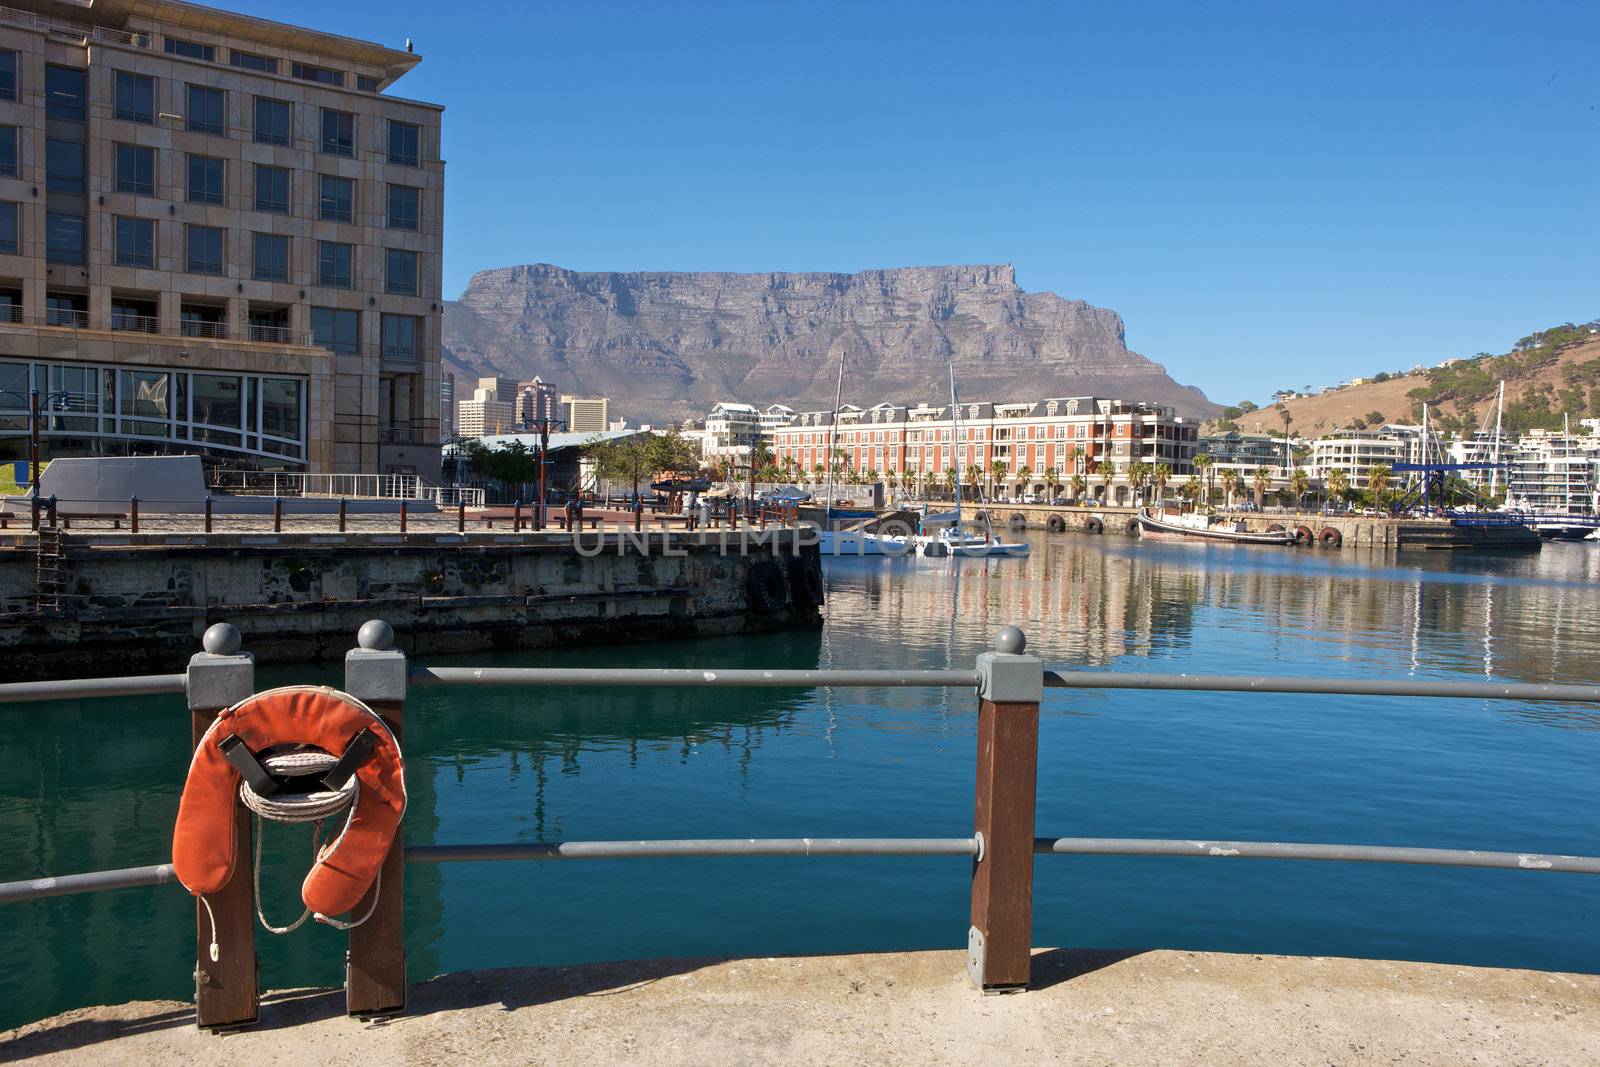 Cape Town, V&A Waterfront by johanelzenga